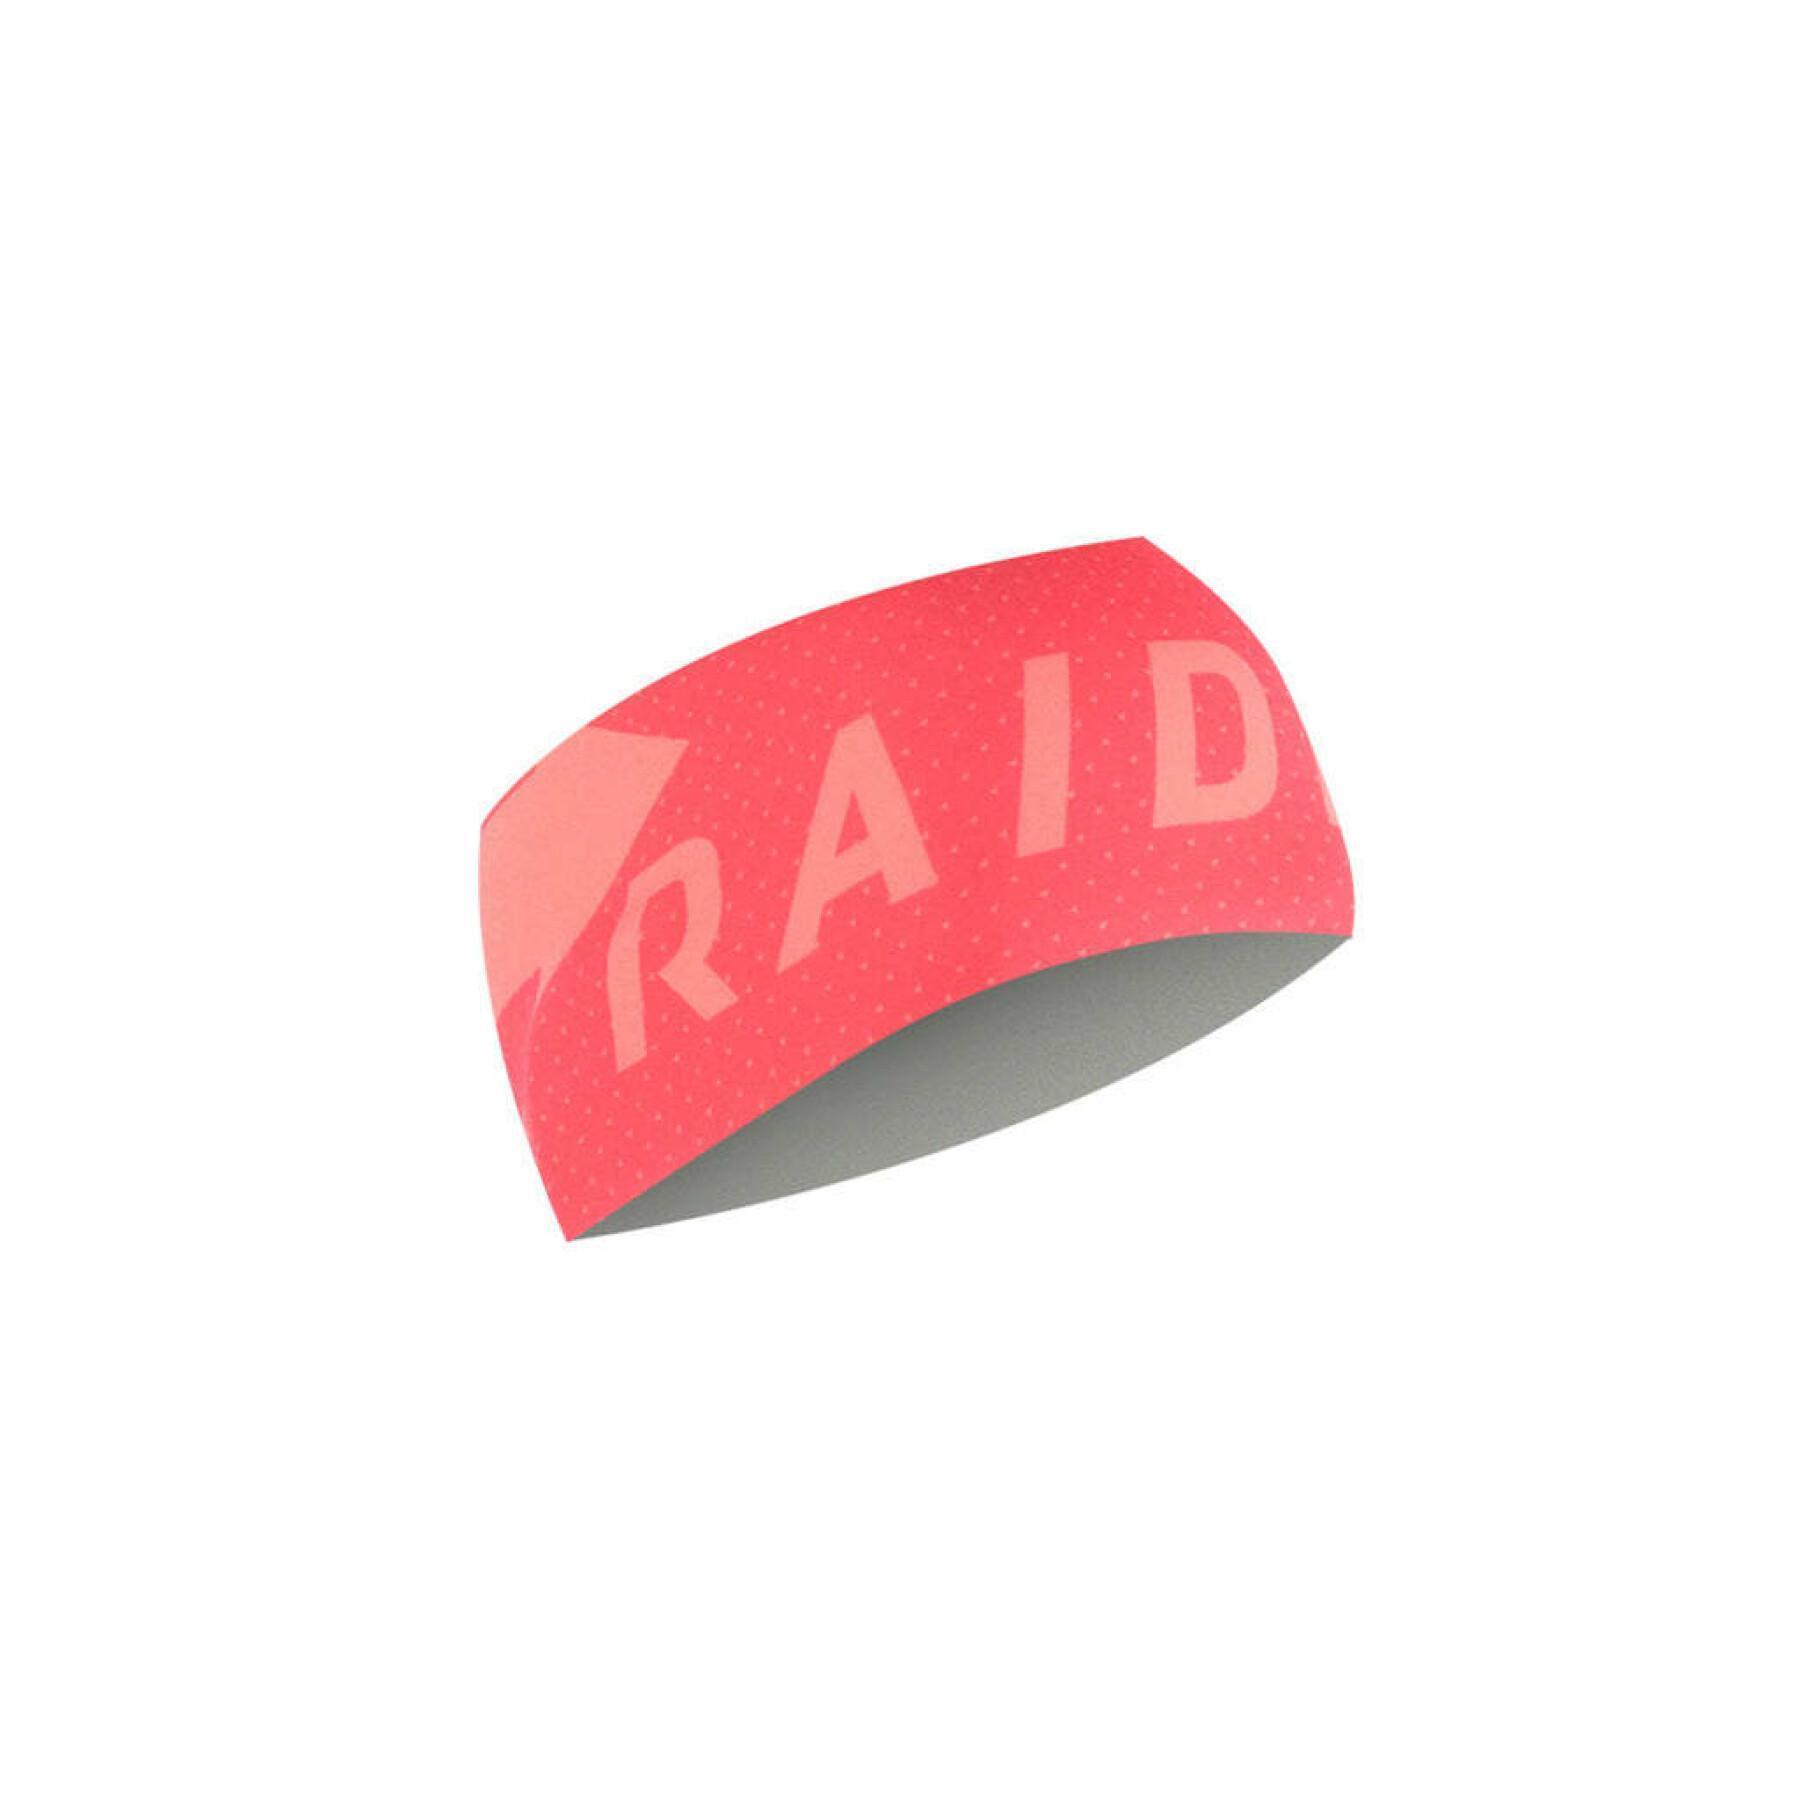 Women's headband RaidLight Wintertrail